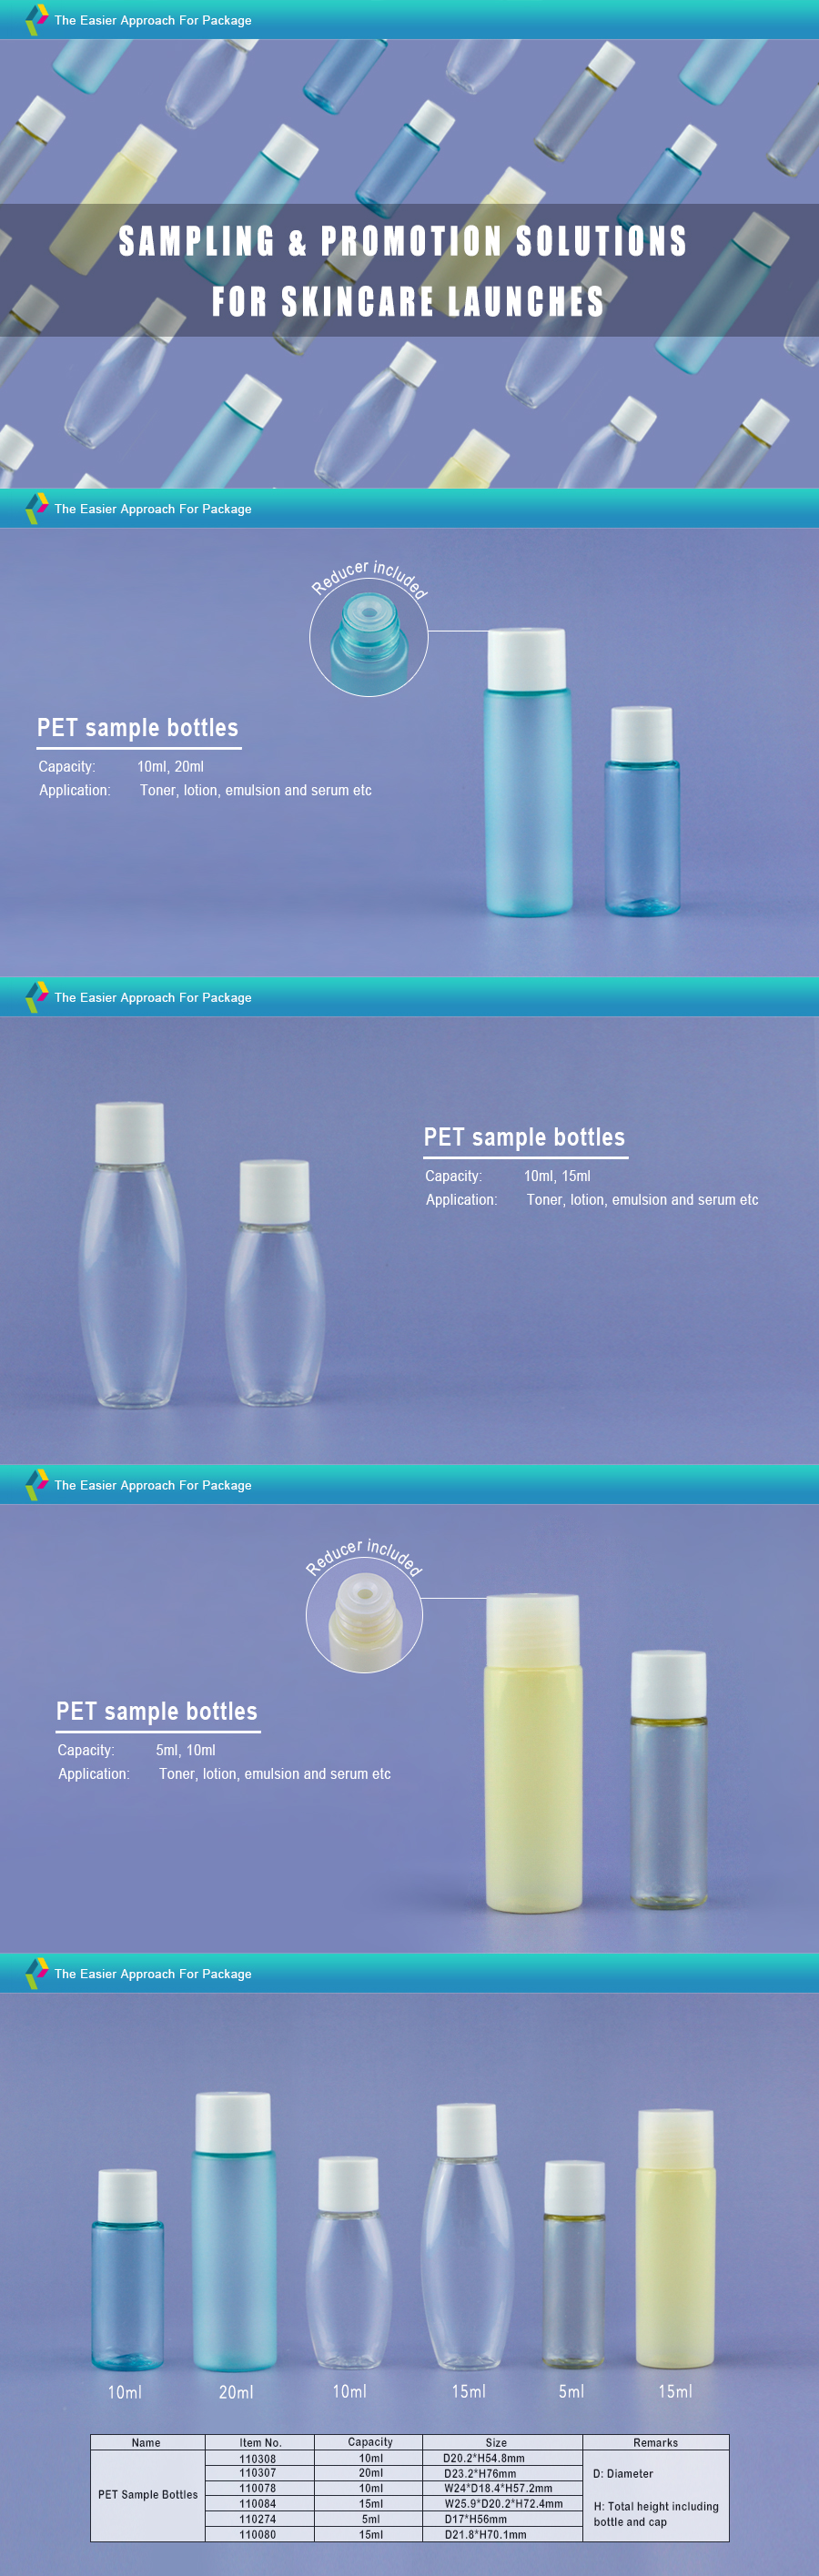 COPCO-PET-Sample-Bottles.jpg